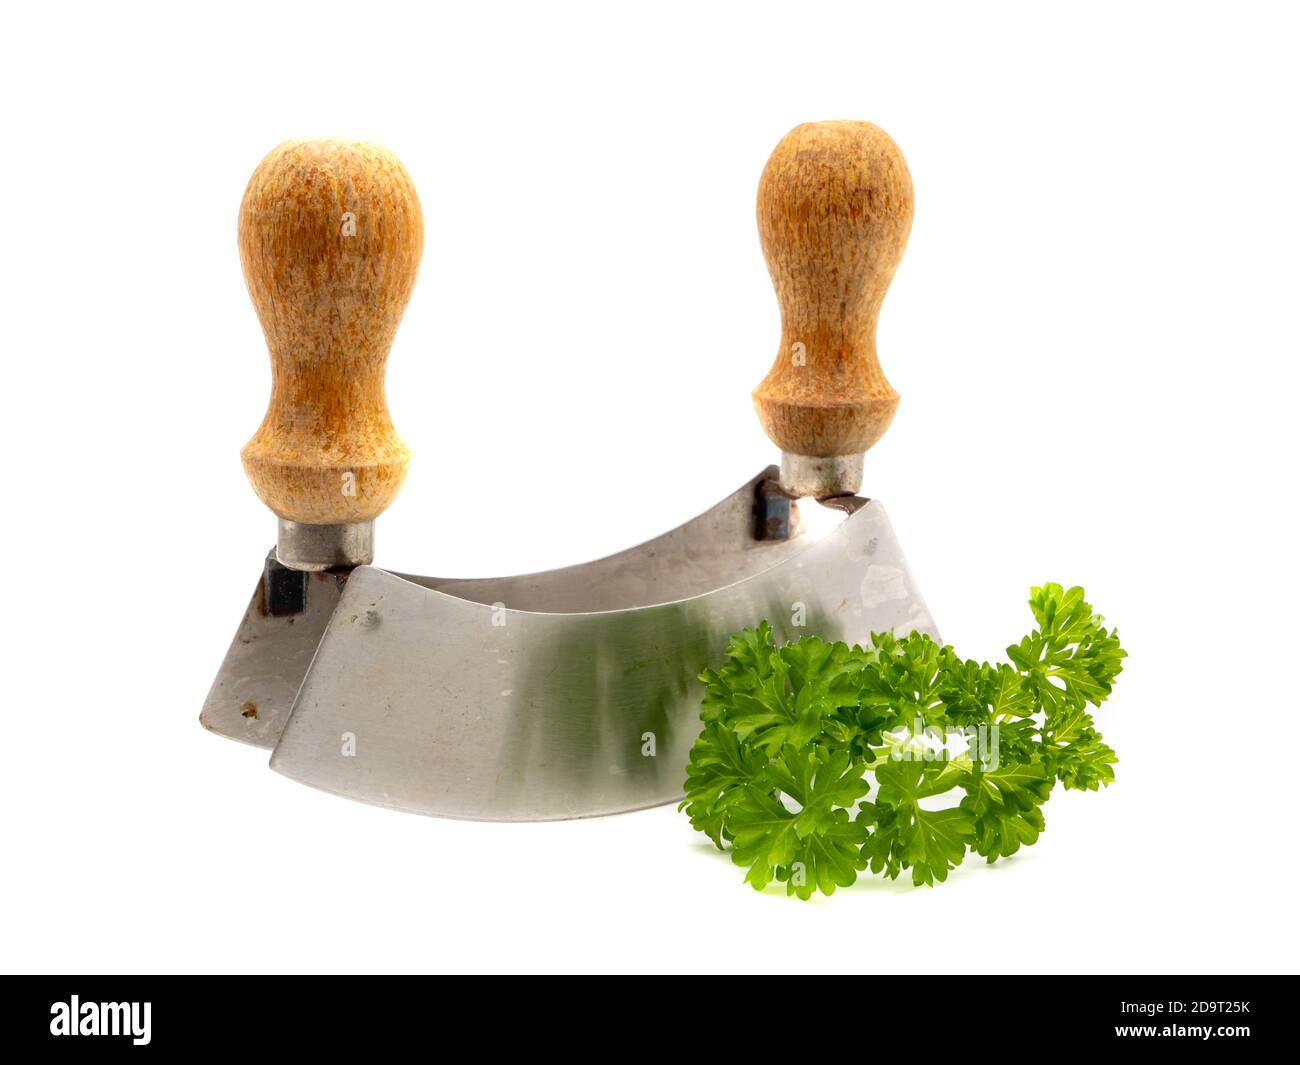 https://c8.alamy.com/comp/2D9T25K/herbal-chopper-chopping-knife-for-parsley-isolated-on-white-background-2D9T25K.jpg